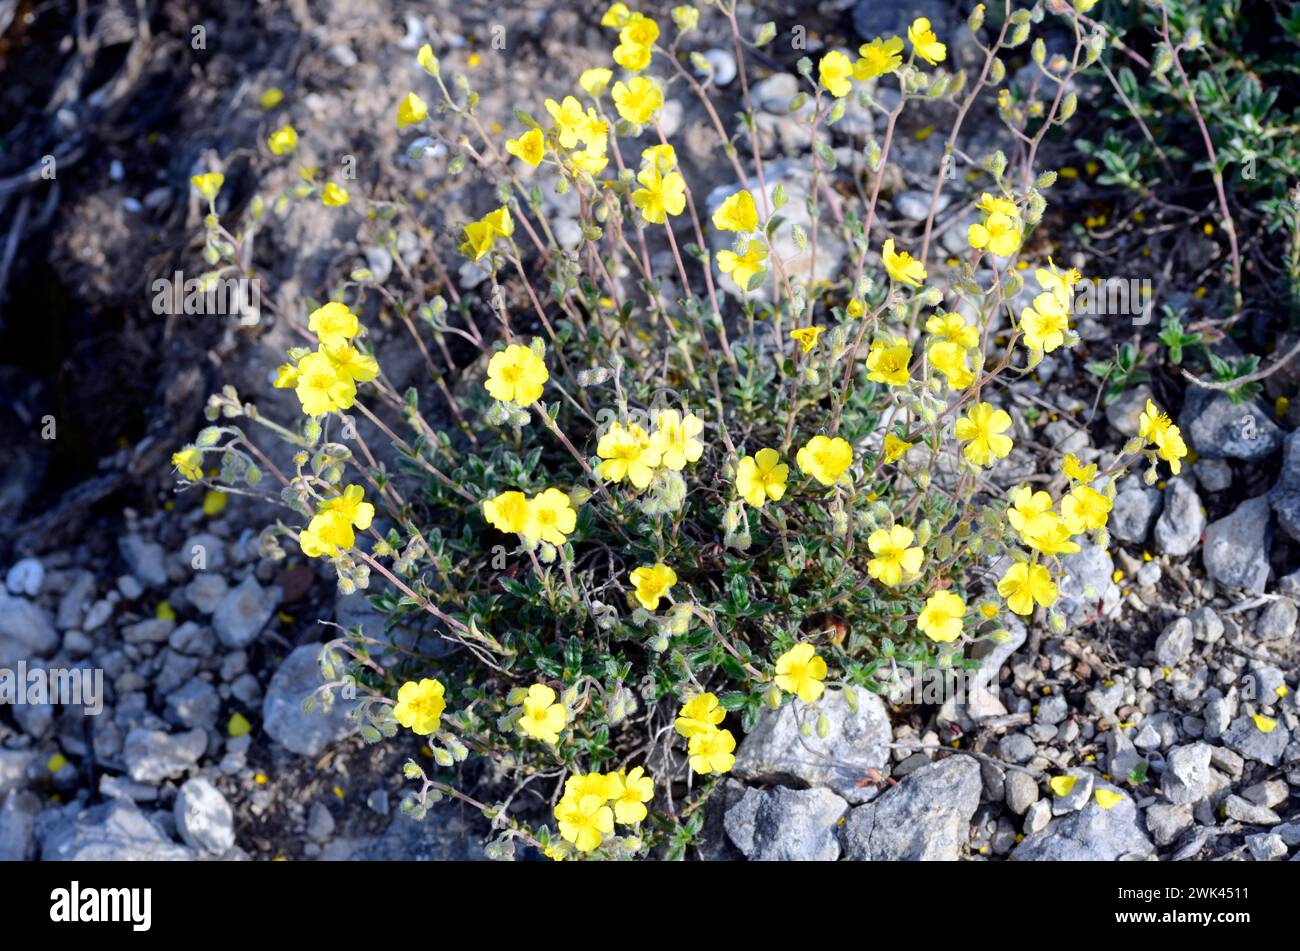 The hoary rockrose (Helianthemum oelandicum) in flower. It is a rocky plant from calcareous soils. Stock Photo